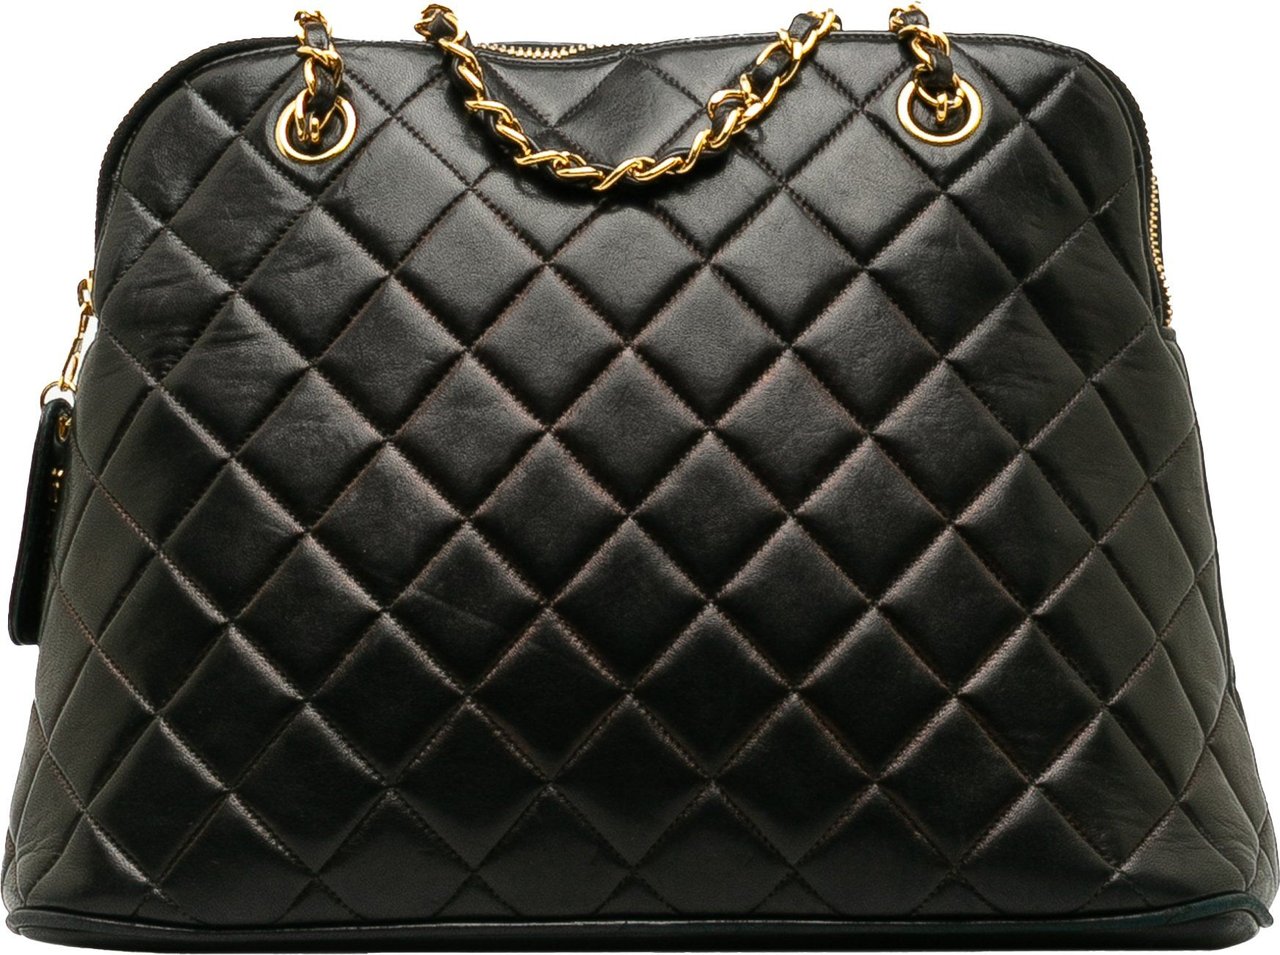 Chanel Quilted Lambskin Dome Shoulder Bag Zwart